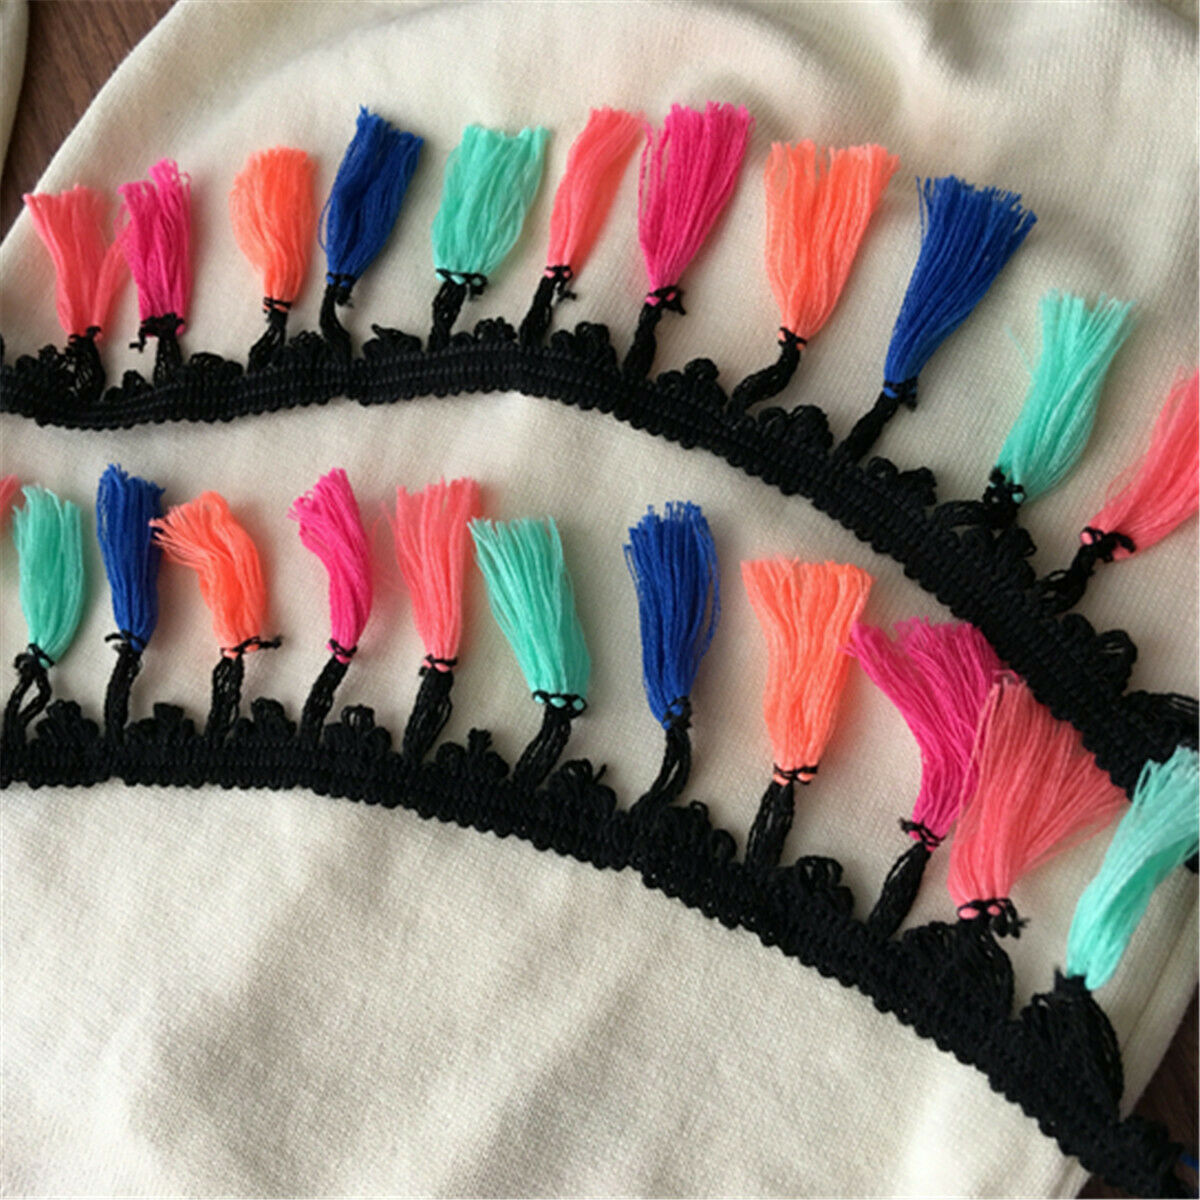 1 Yard Colorful Tassel Fringe Trim Braid Lace Ribbon Sewing Crafts 7.5cm Width